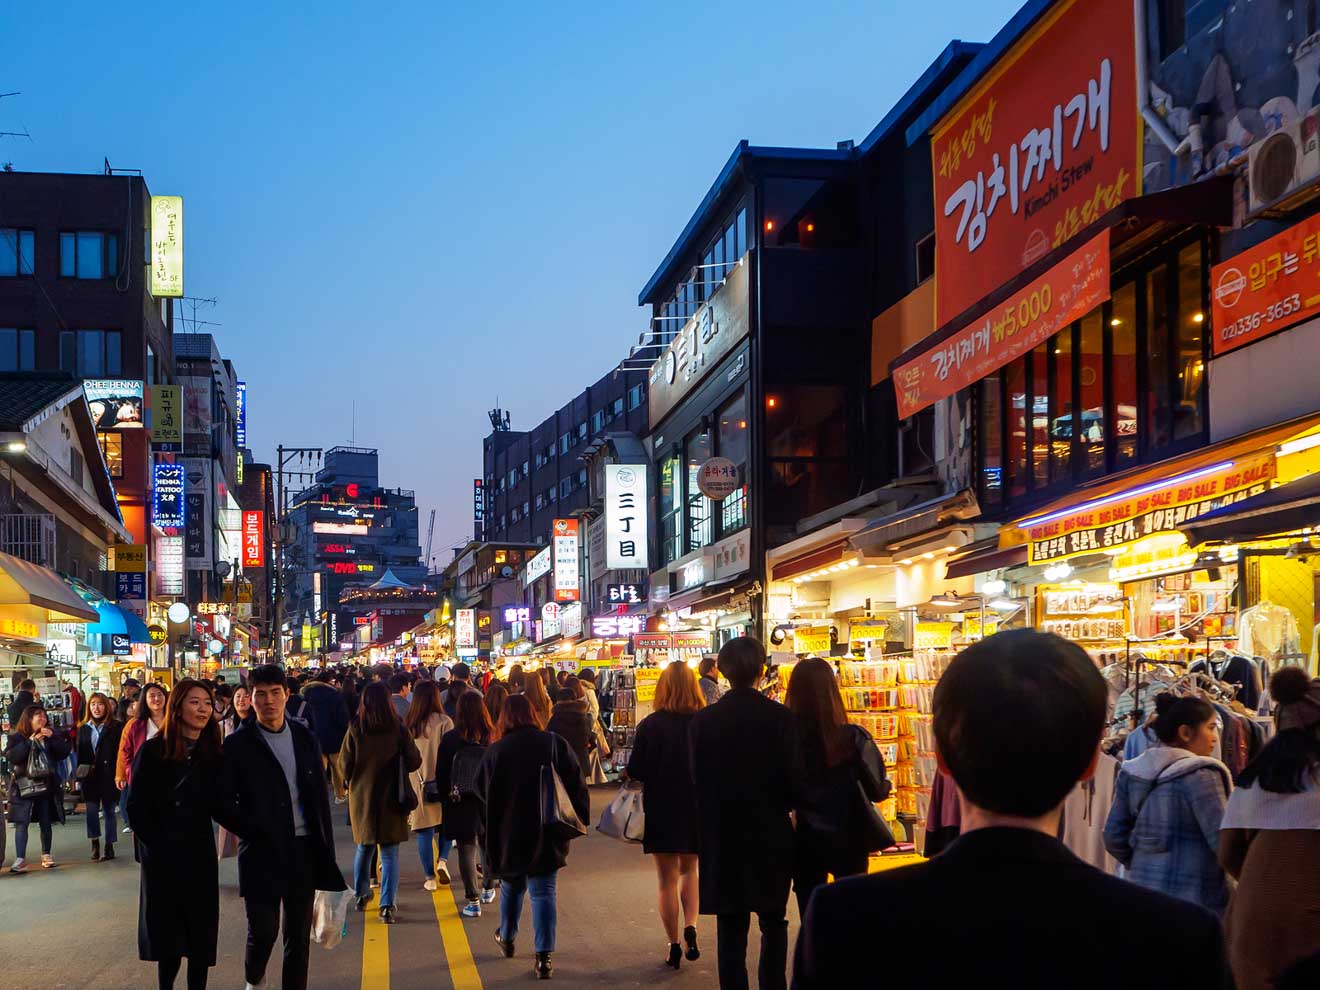 A crowded street with many people walking around in Hongdae neighborhood Seoul South Korea